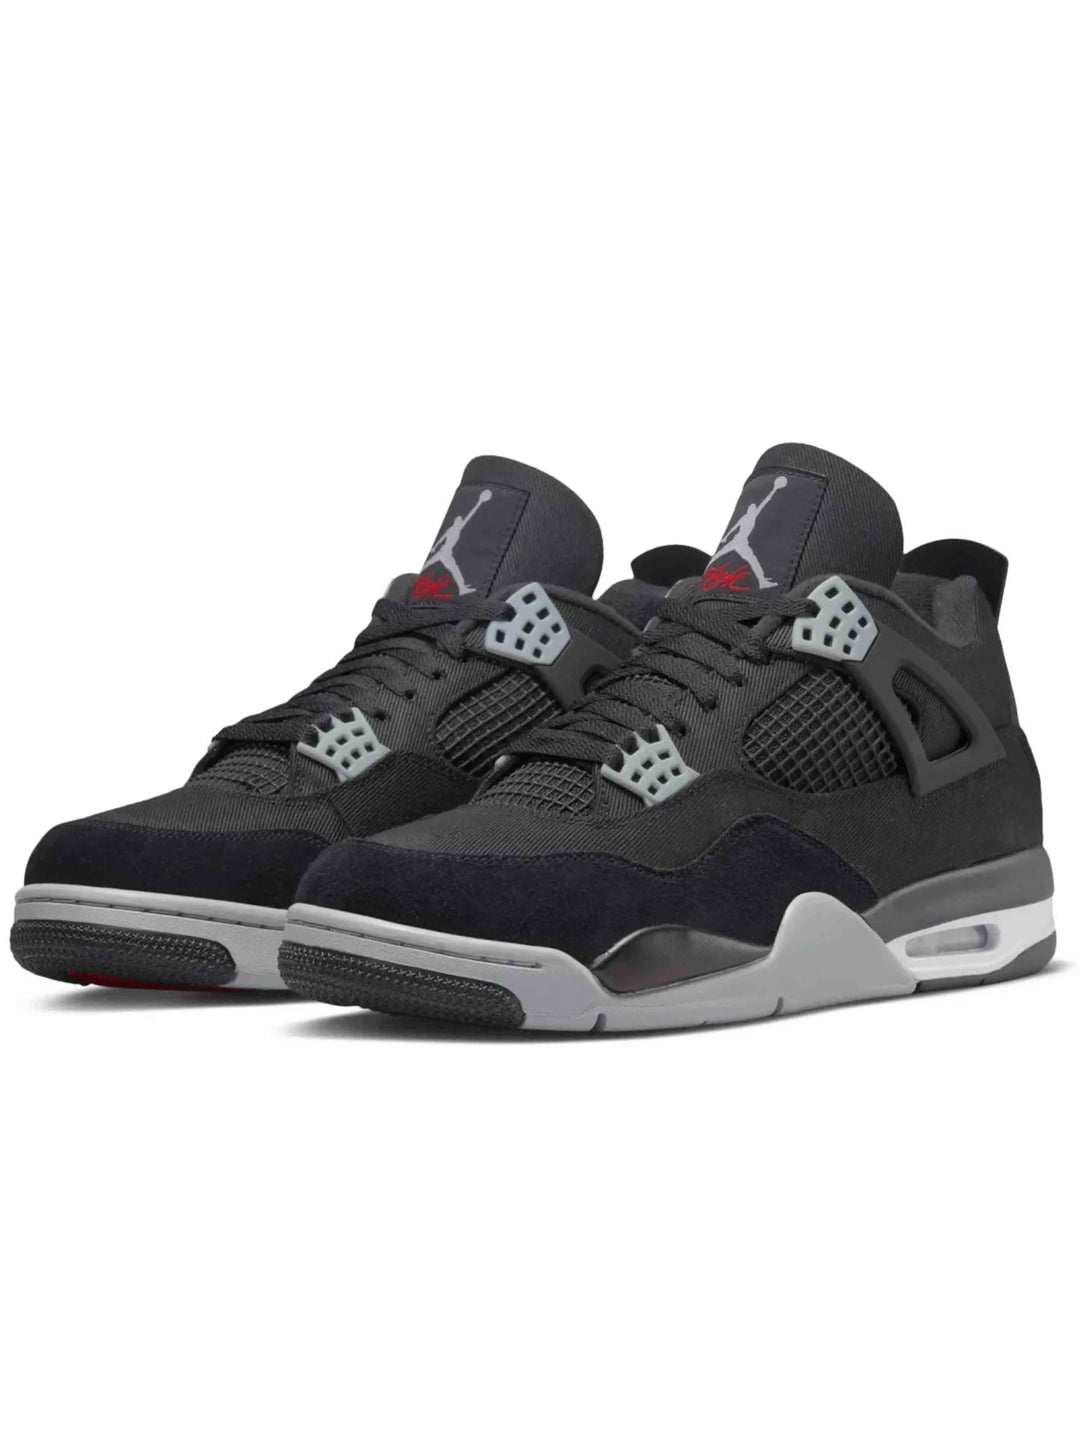 Nike Air Jordan 4 Retro SE Black Canvas Jordan Brand